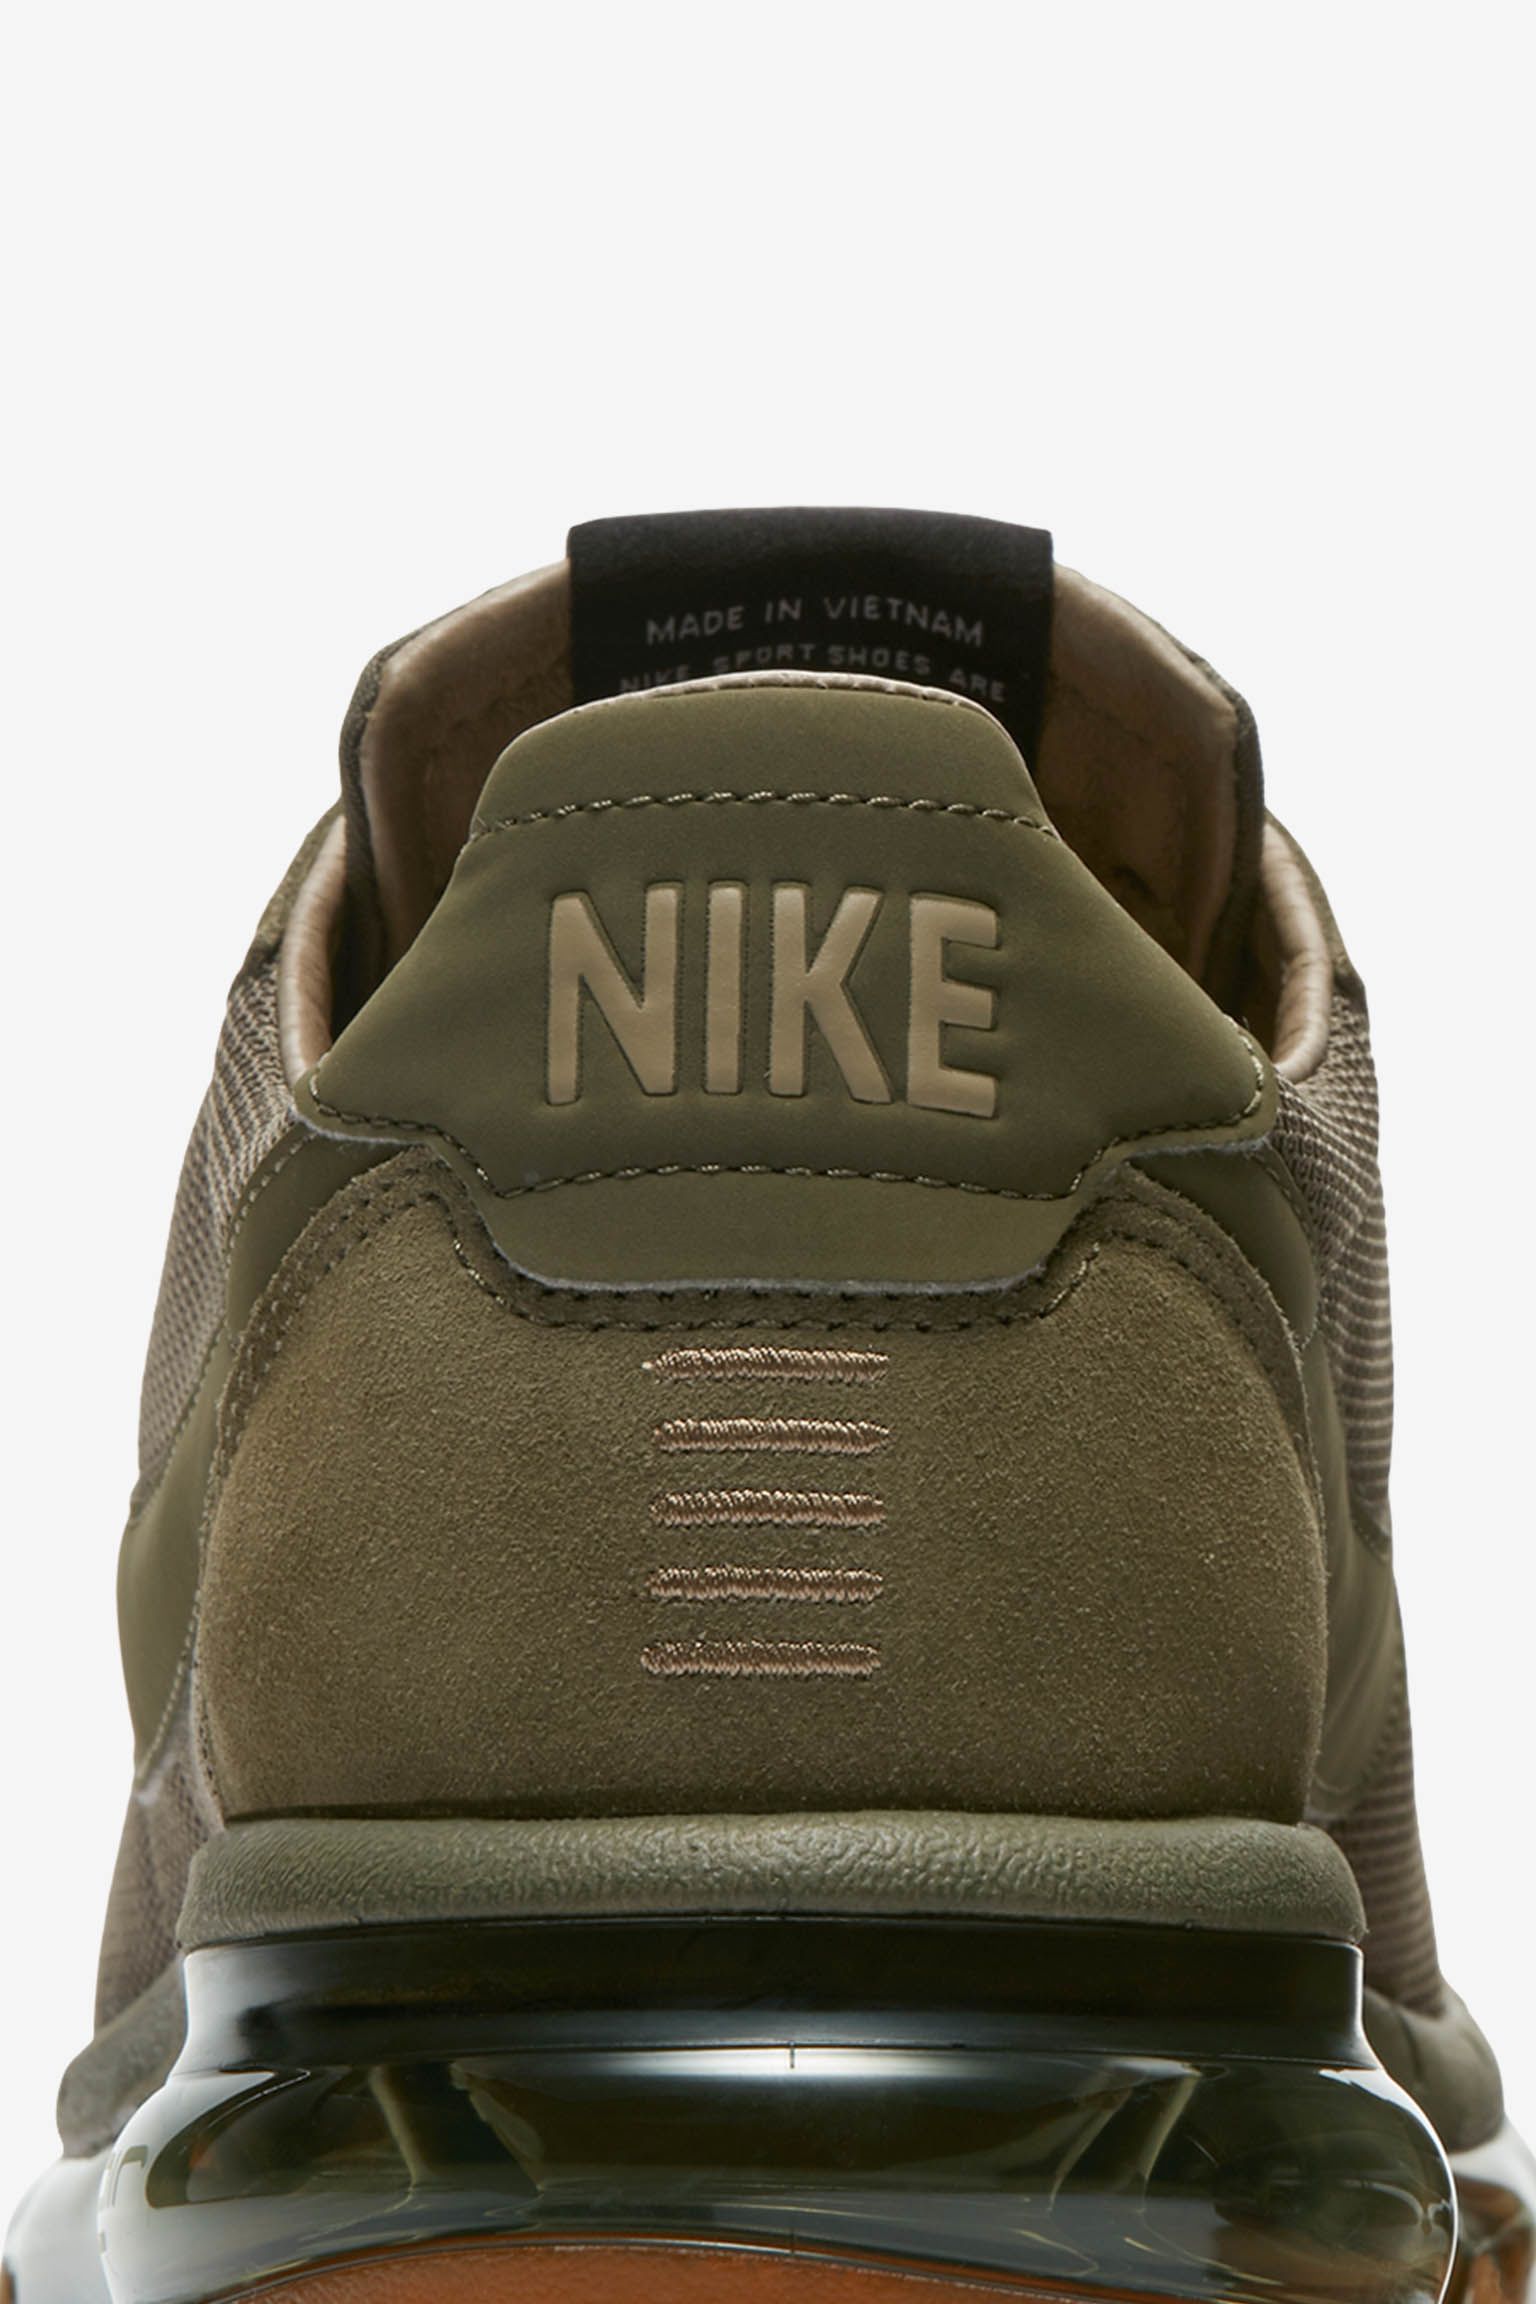 Monet Instruir calificación Nike Air Max LD-Zero "Medium Olive &amp; Khaki". Nike SNKRS ES